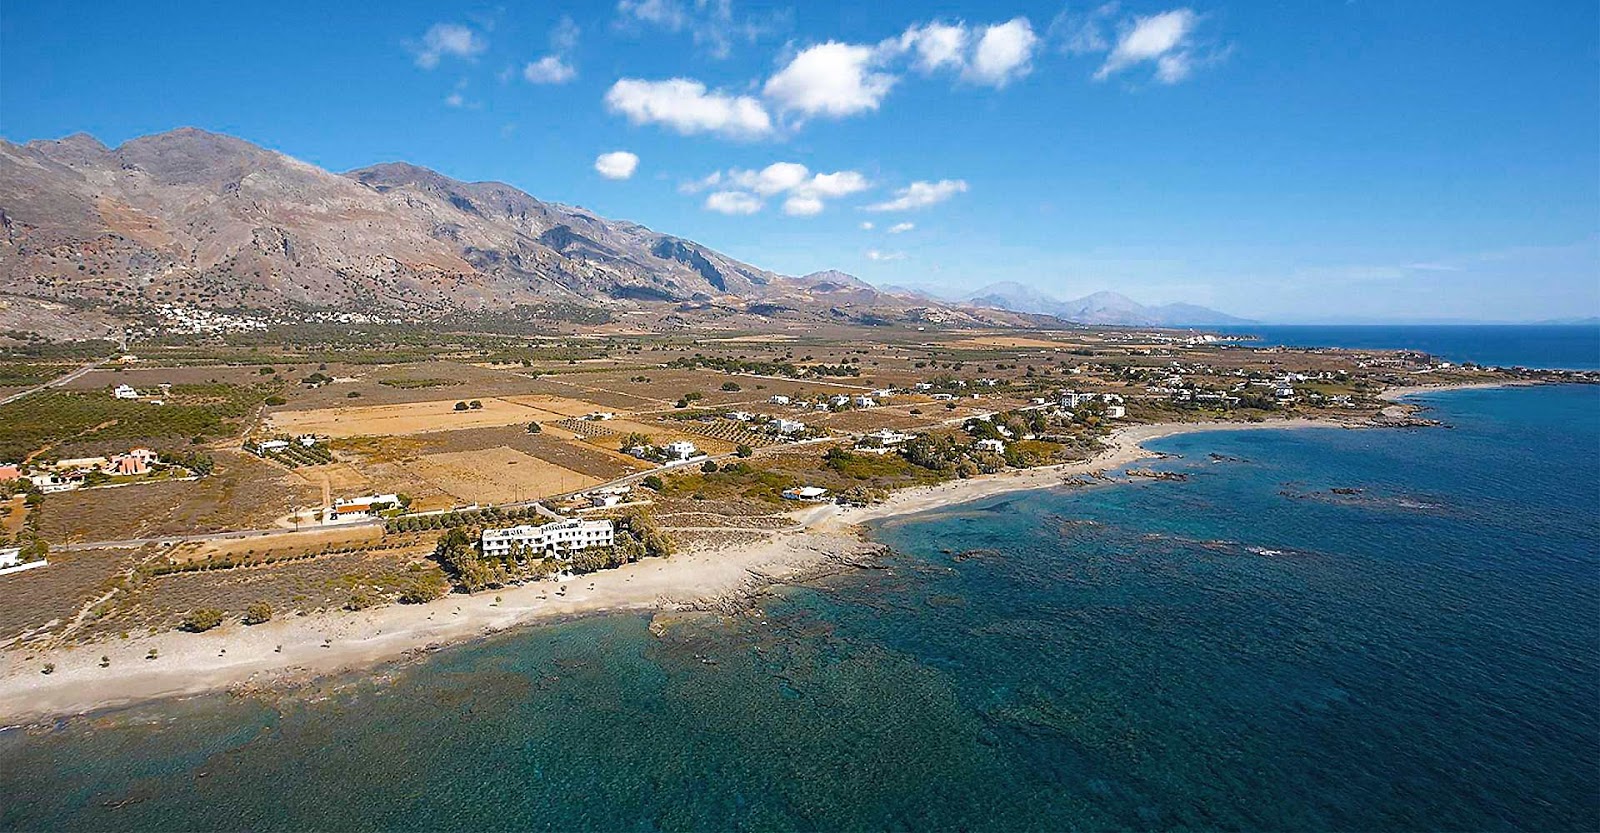 Photo of Vatalos beach and the settlement